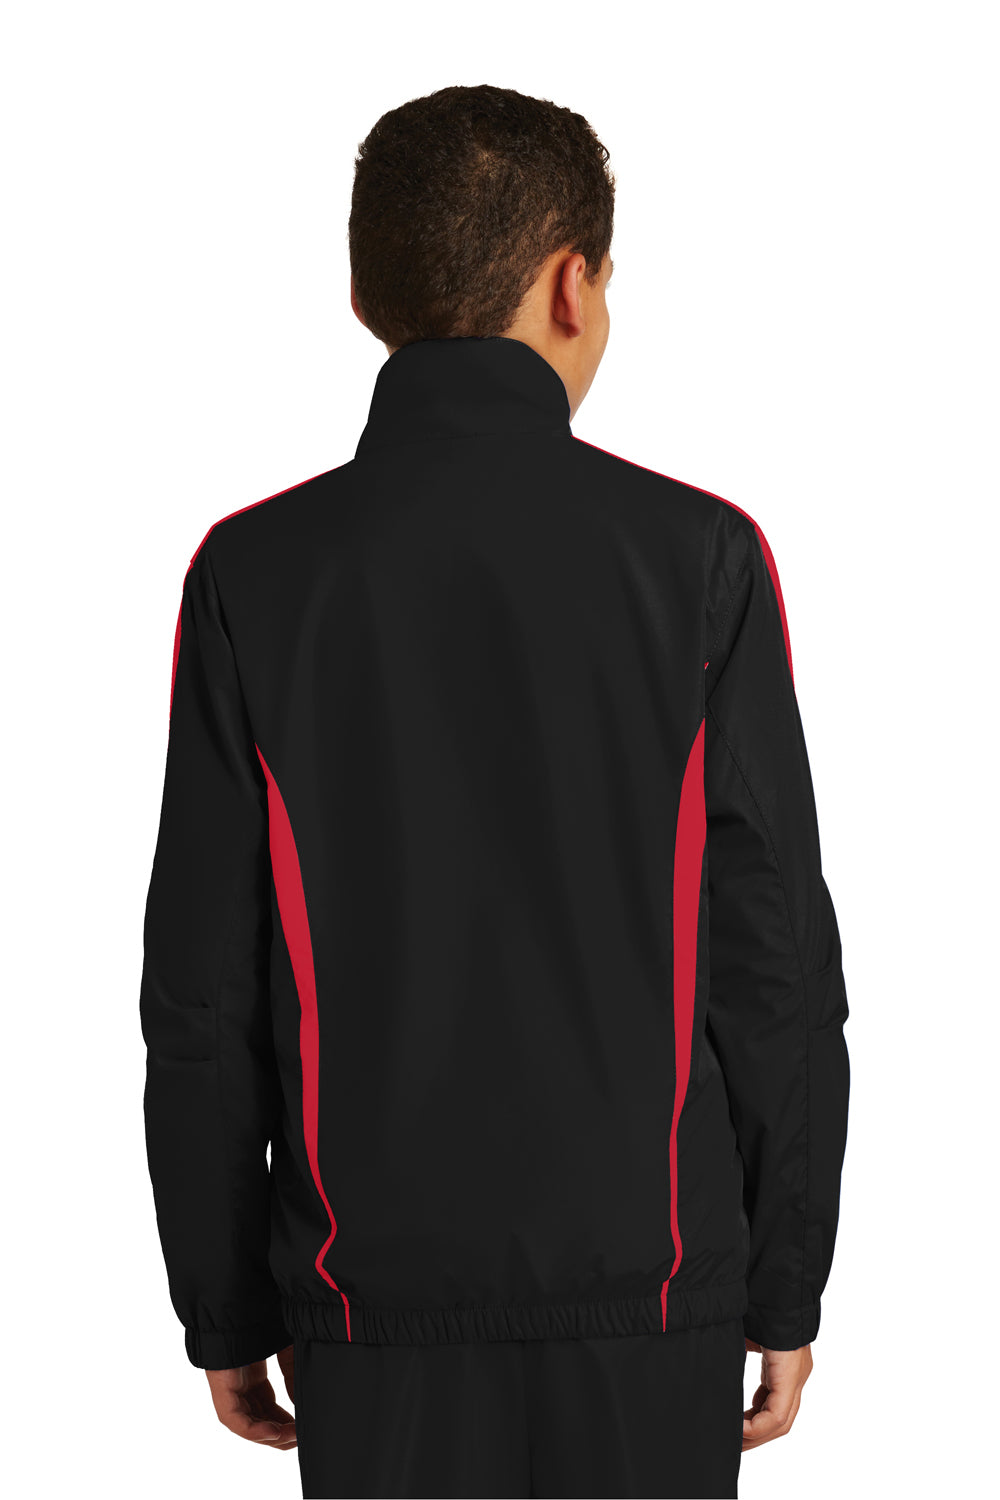 Sport-Tek YST60 Youth Water Resistant Full Zip Jacket Black/Red Back